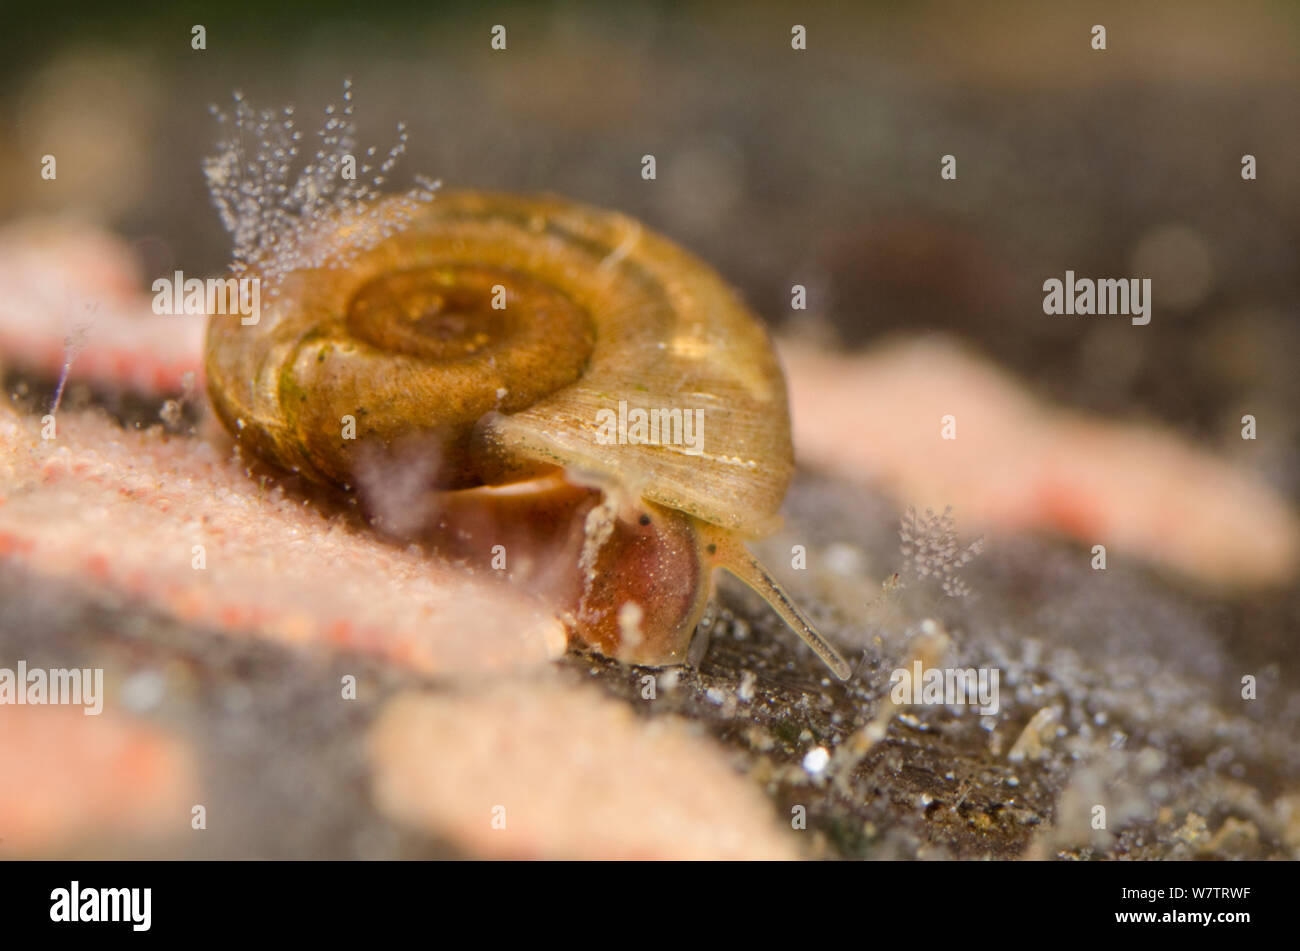 Caracoles de agua dulce (Planorbidae) rastreo entre colonias de ciliados (Carchesium) Europa, Julio, condiciones controladas Foto de stock